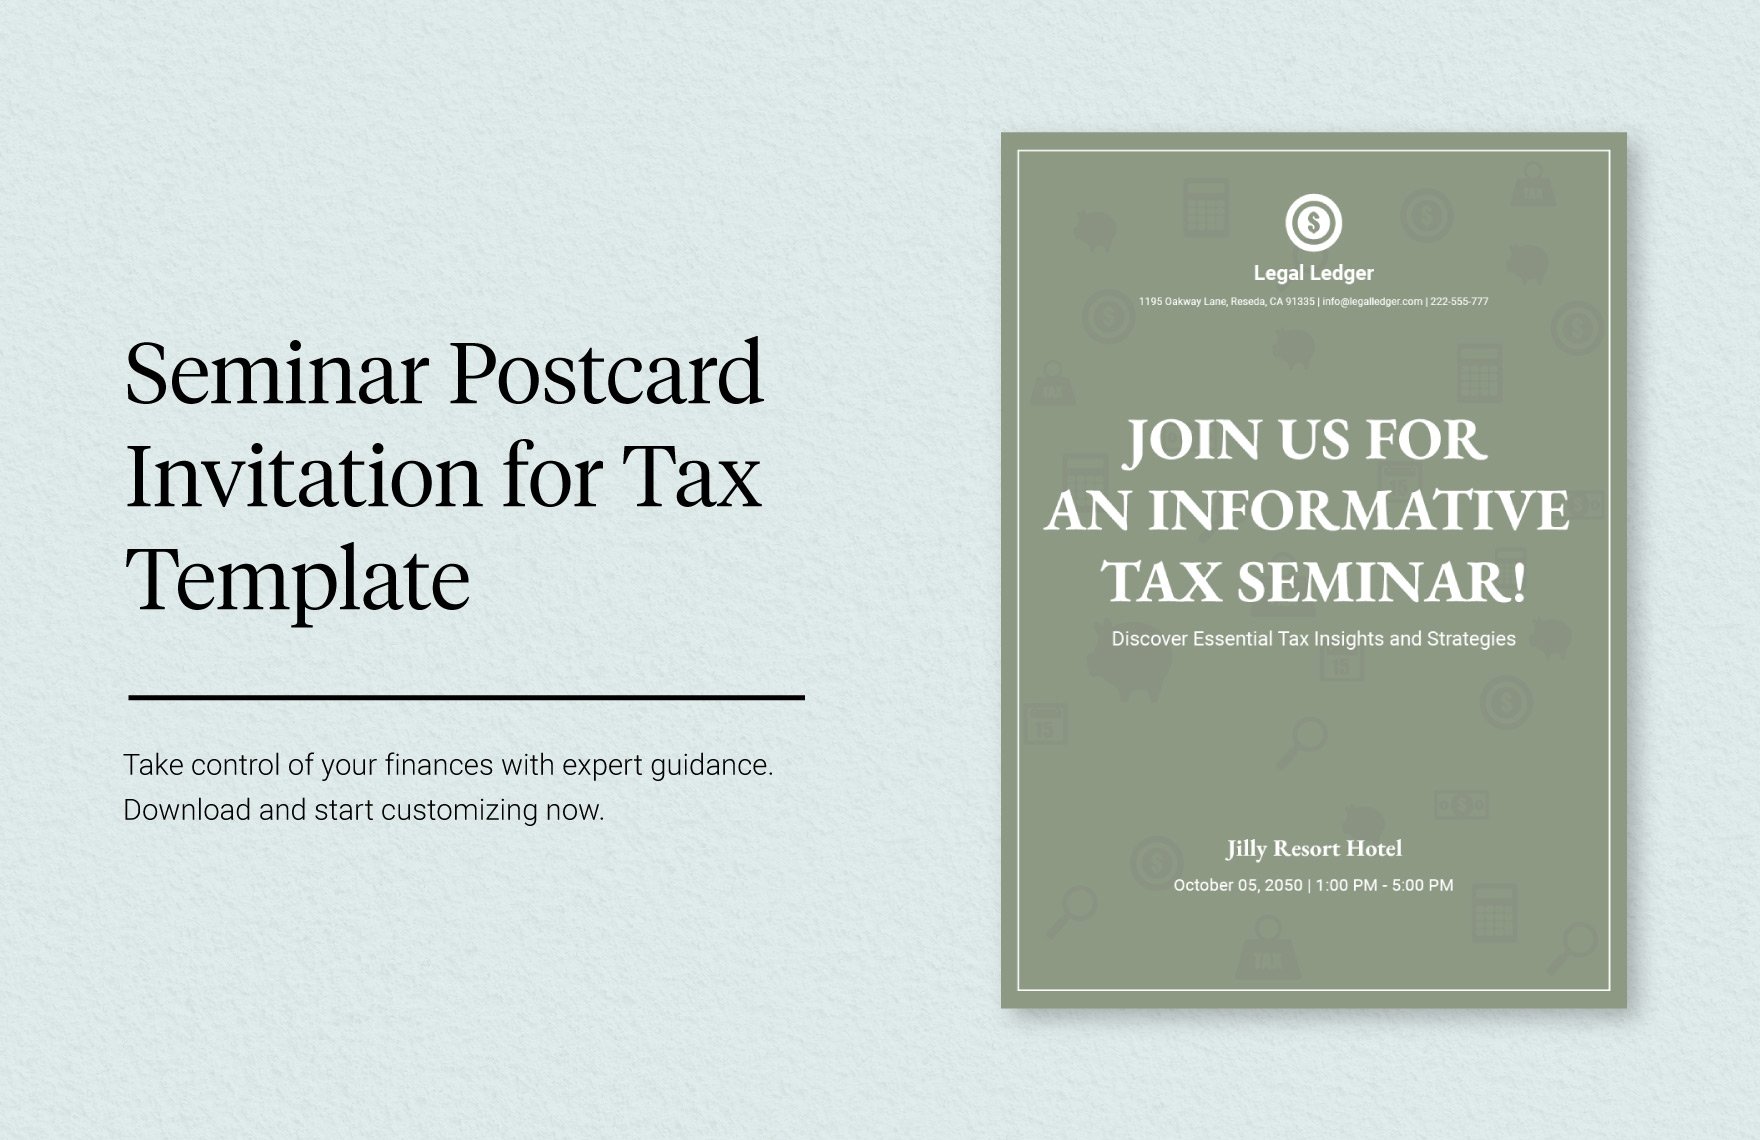 Seminar Postcard Invitation for Tax in Word, Illustrator, PSD